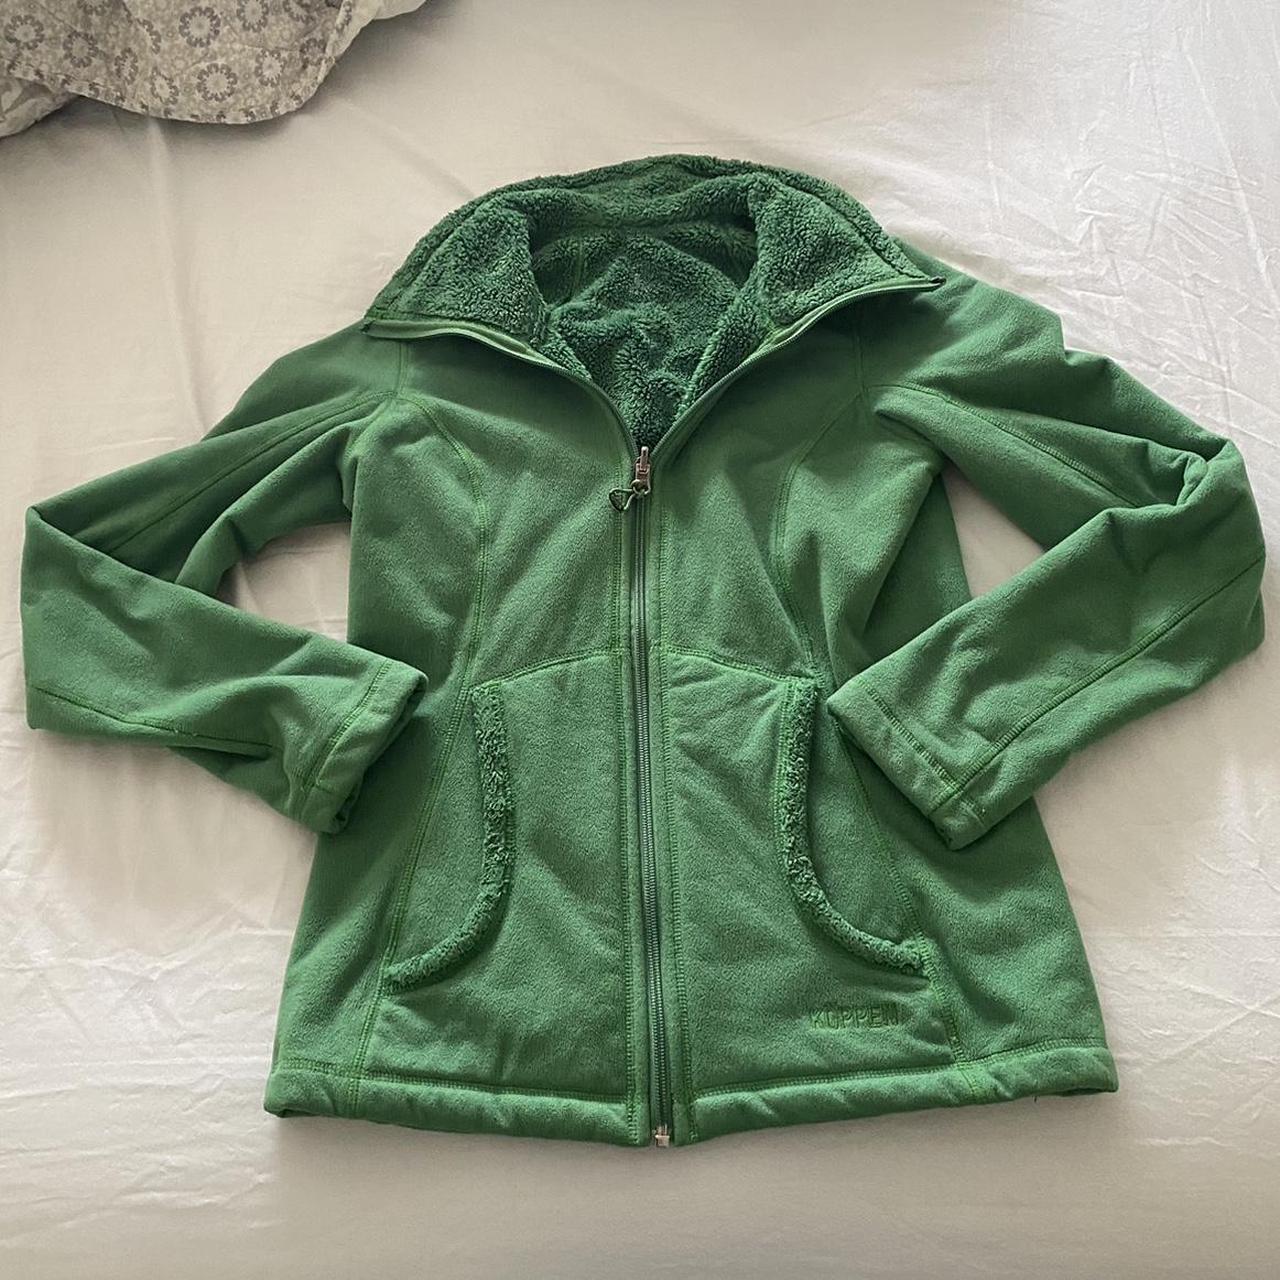 M bright green reversible Köppen jacket jacket is... - Depop